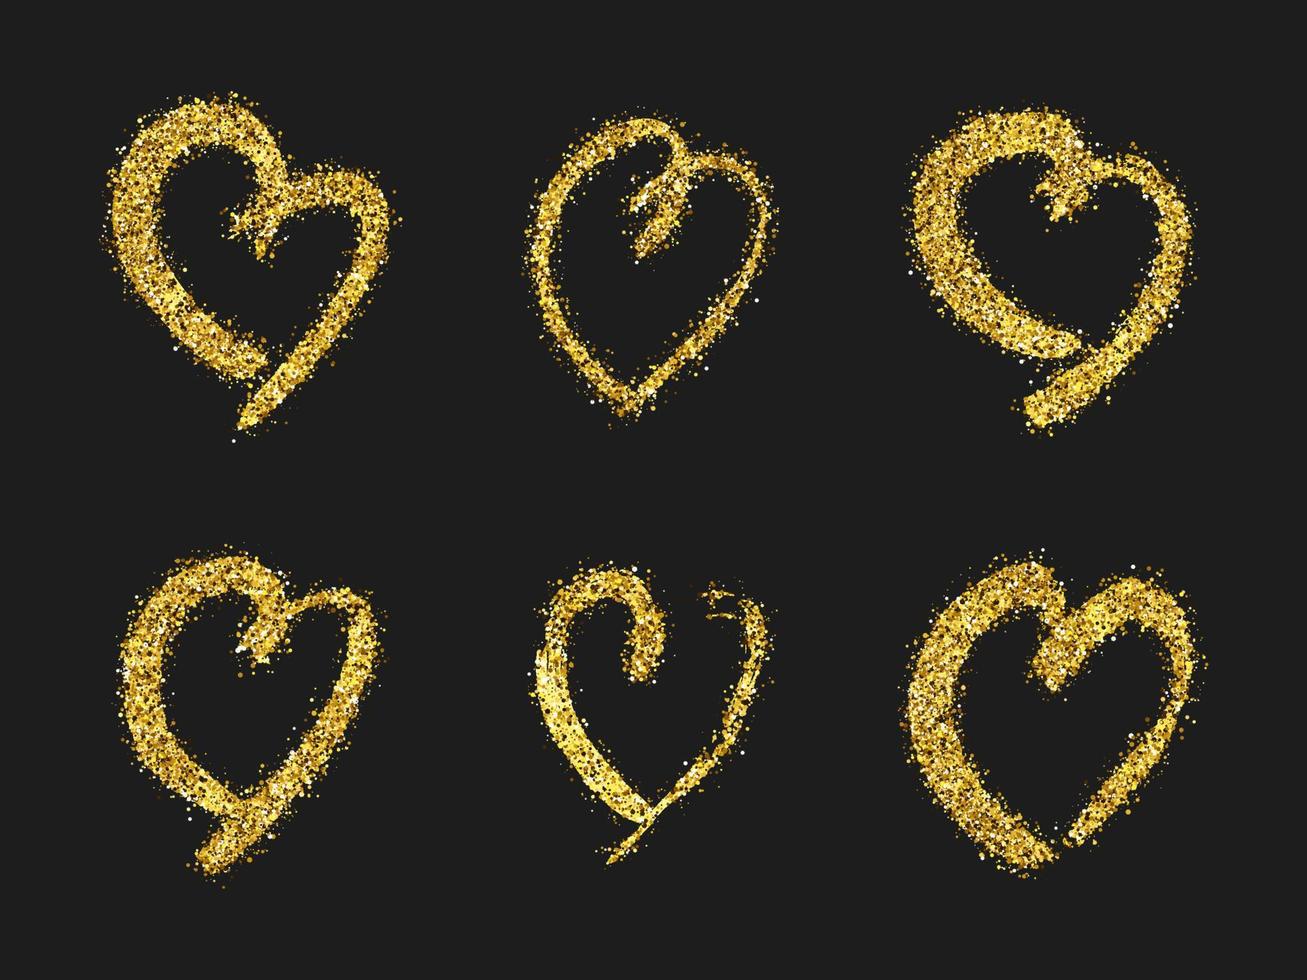 Gold glitter doodle heart on dark background. Set of six gold grunge hand drawn heart. Romantic love symbol. Vector illustration.